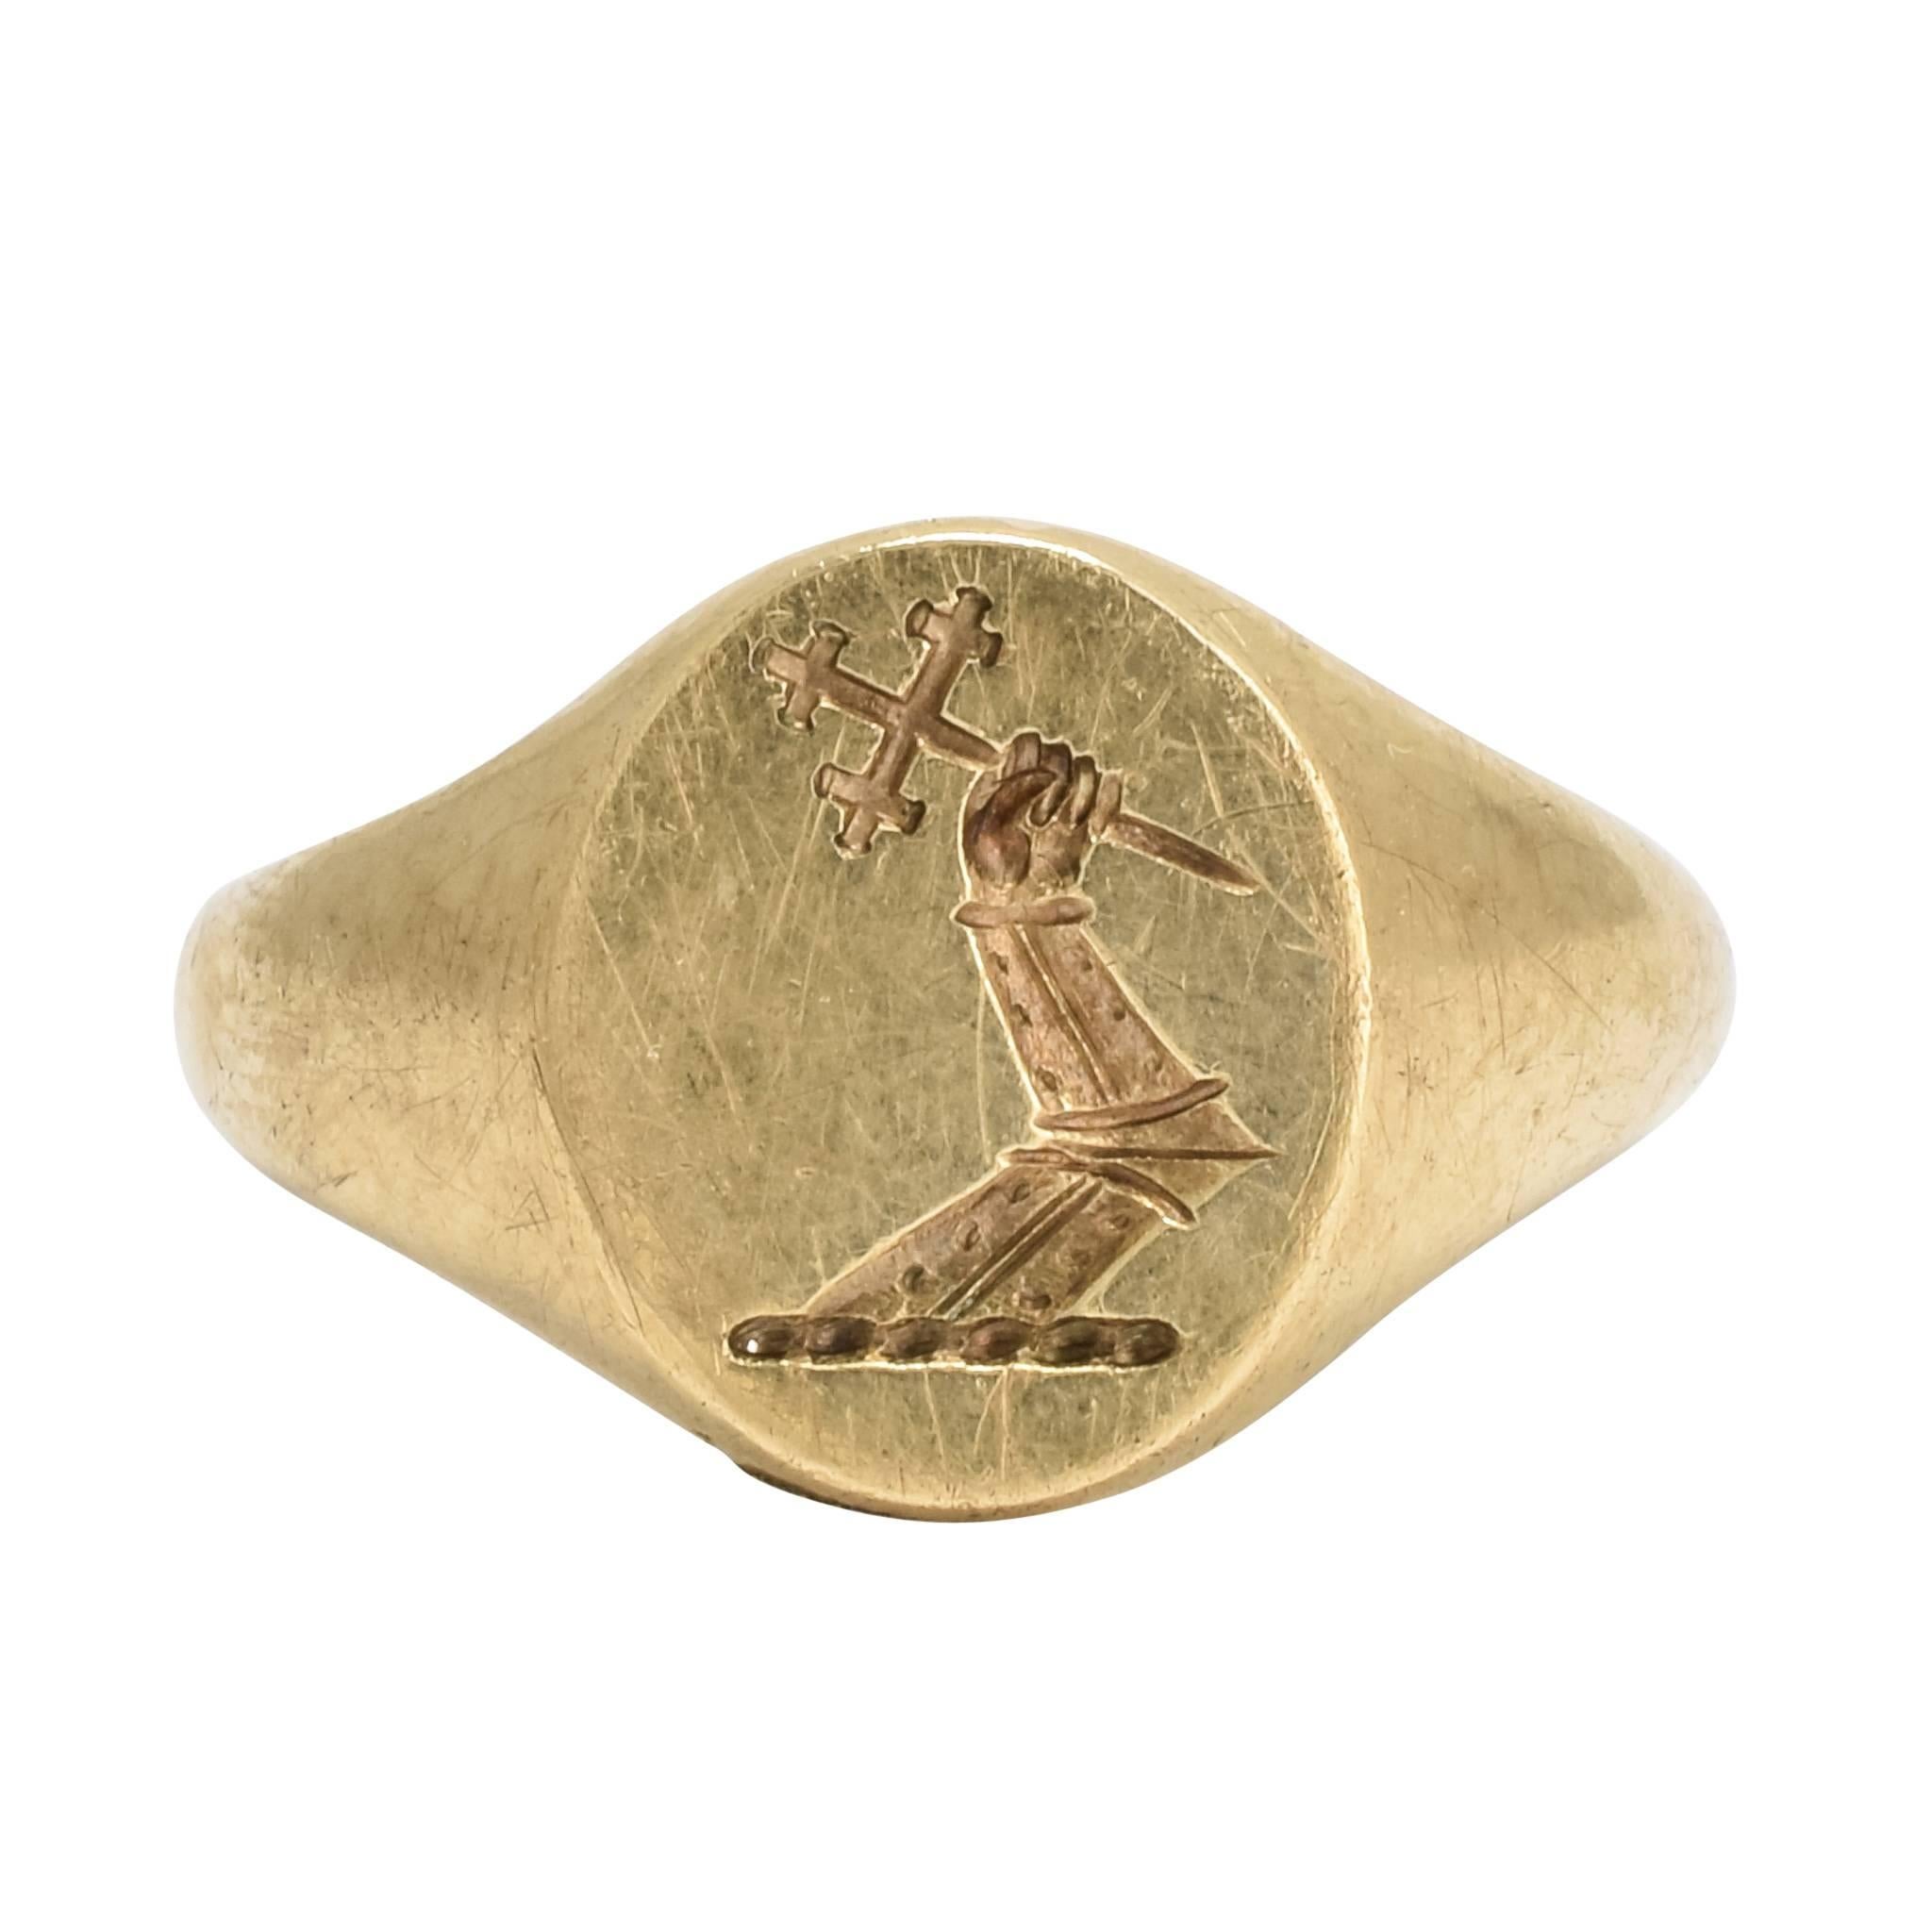 Art Deco Heraldic Intaglio Gold Signet Ring by Deakin & Frances